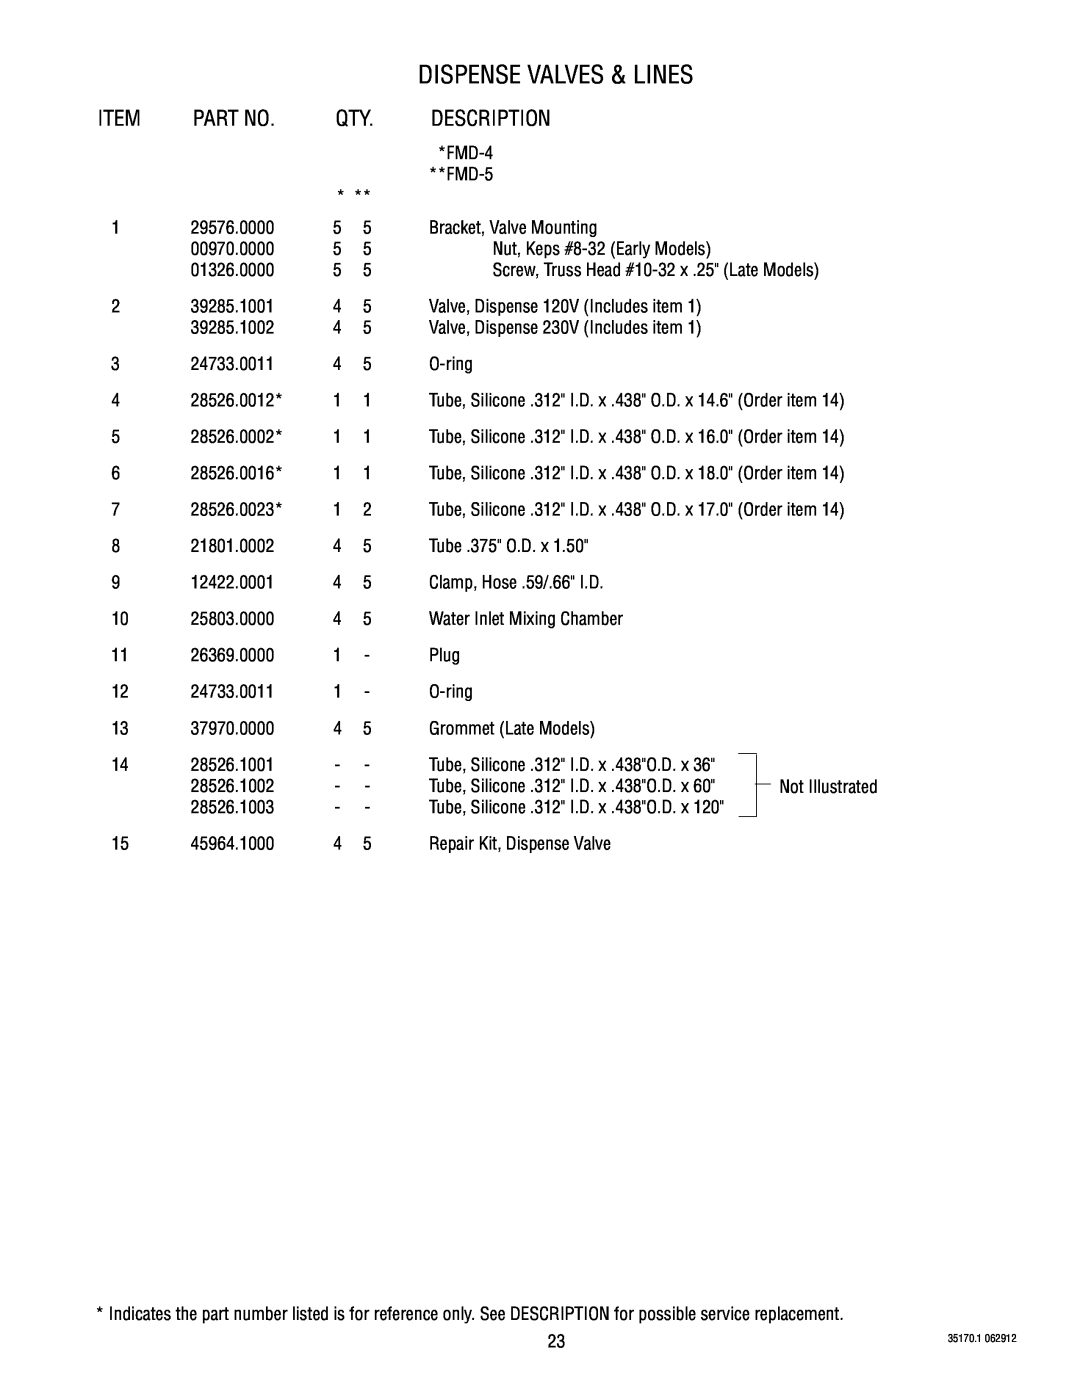 Bunn FMD-5 specifications Dispense Valves & Lines, Description 